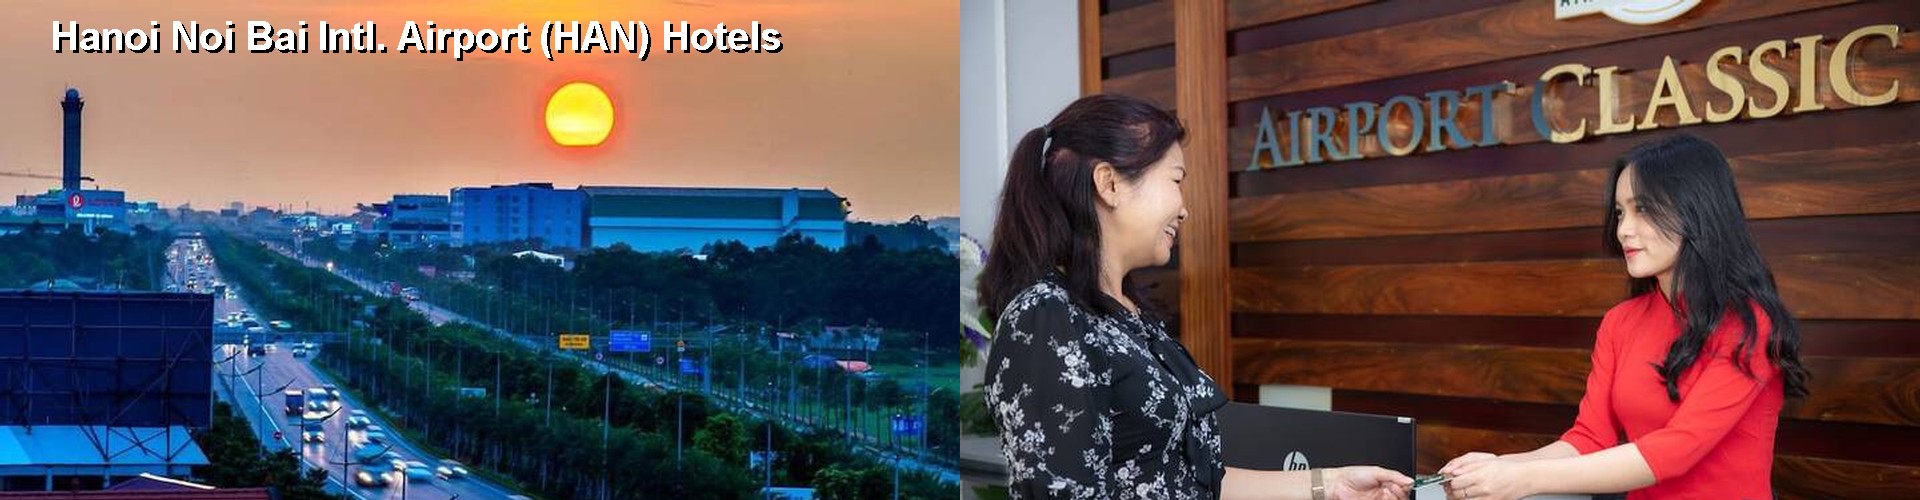 5 Best Hotels near Hanoi Noi Bai Intl. Airport (HAN)